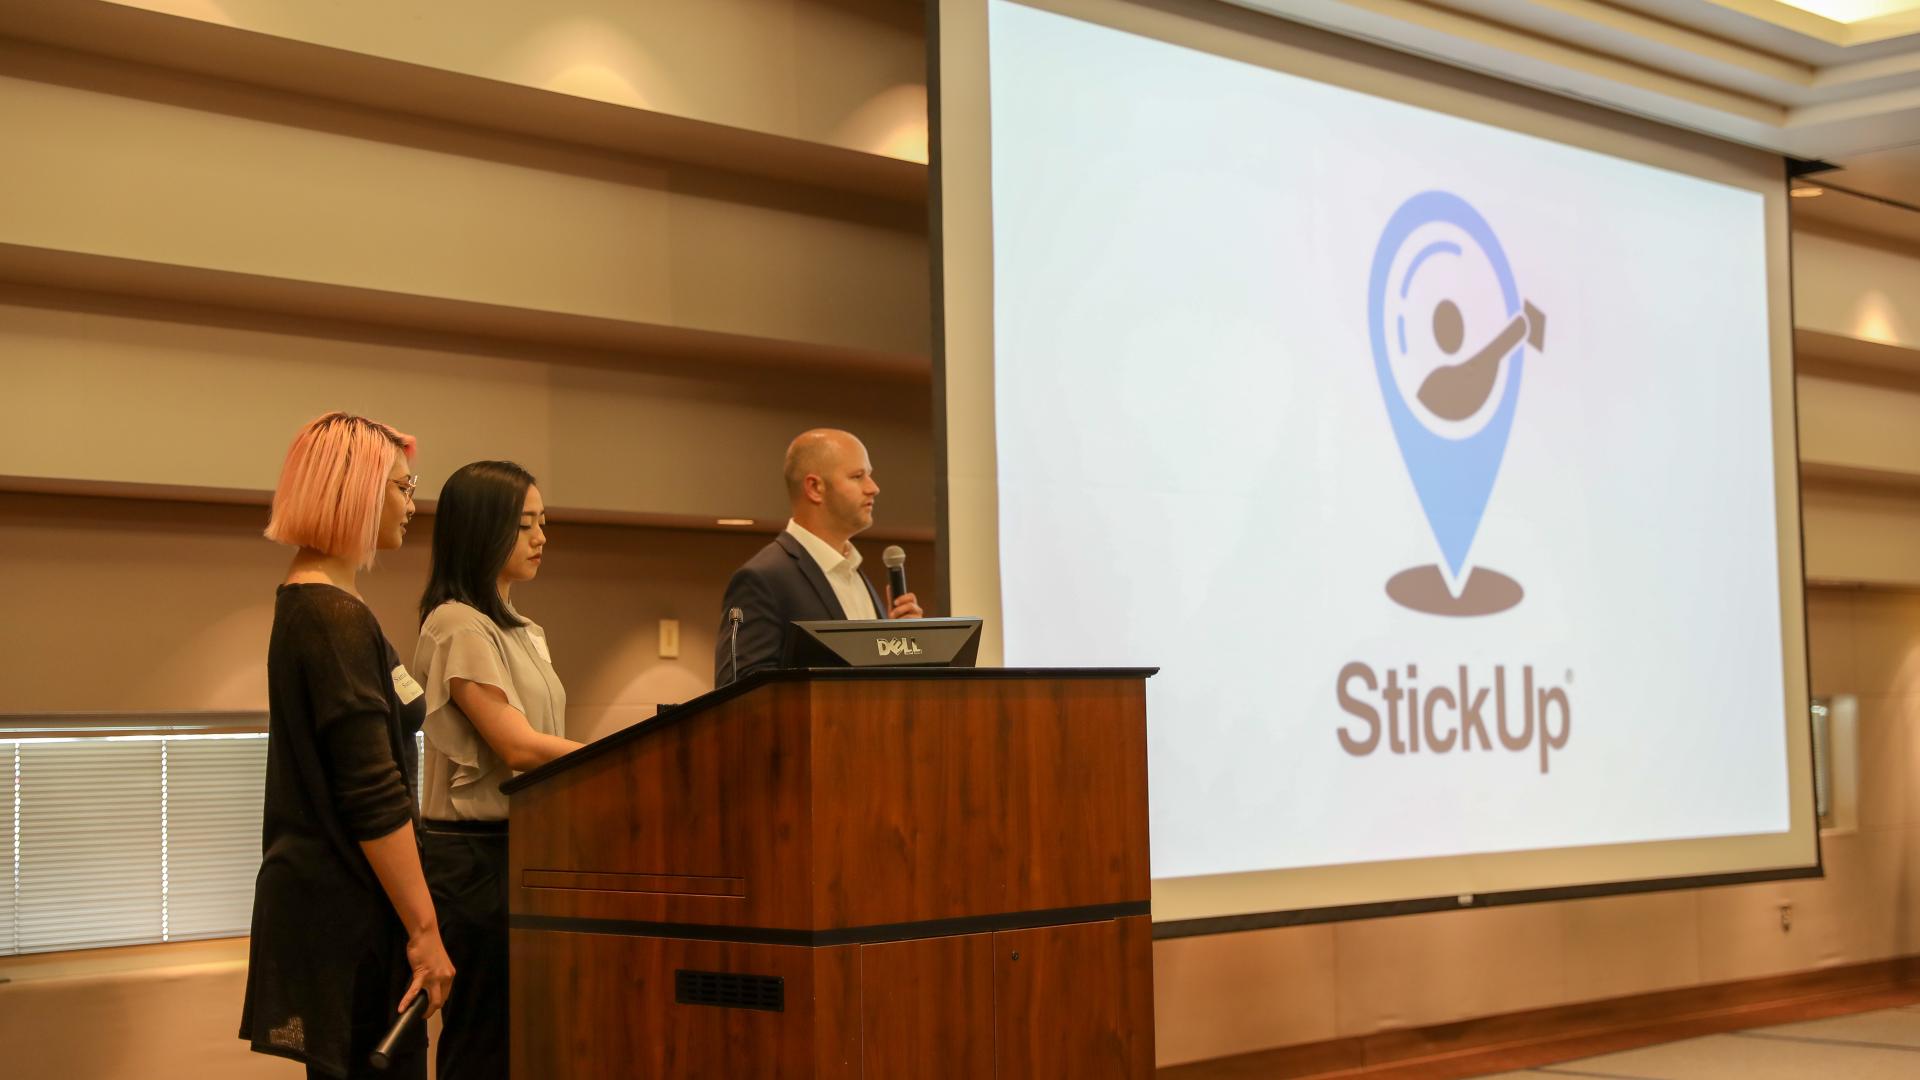 CSULB Innovation Challenge Award Ceremony - StickUp